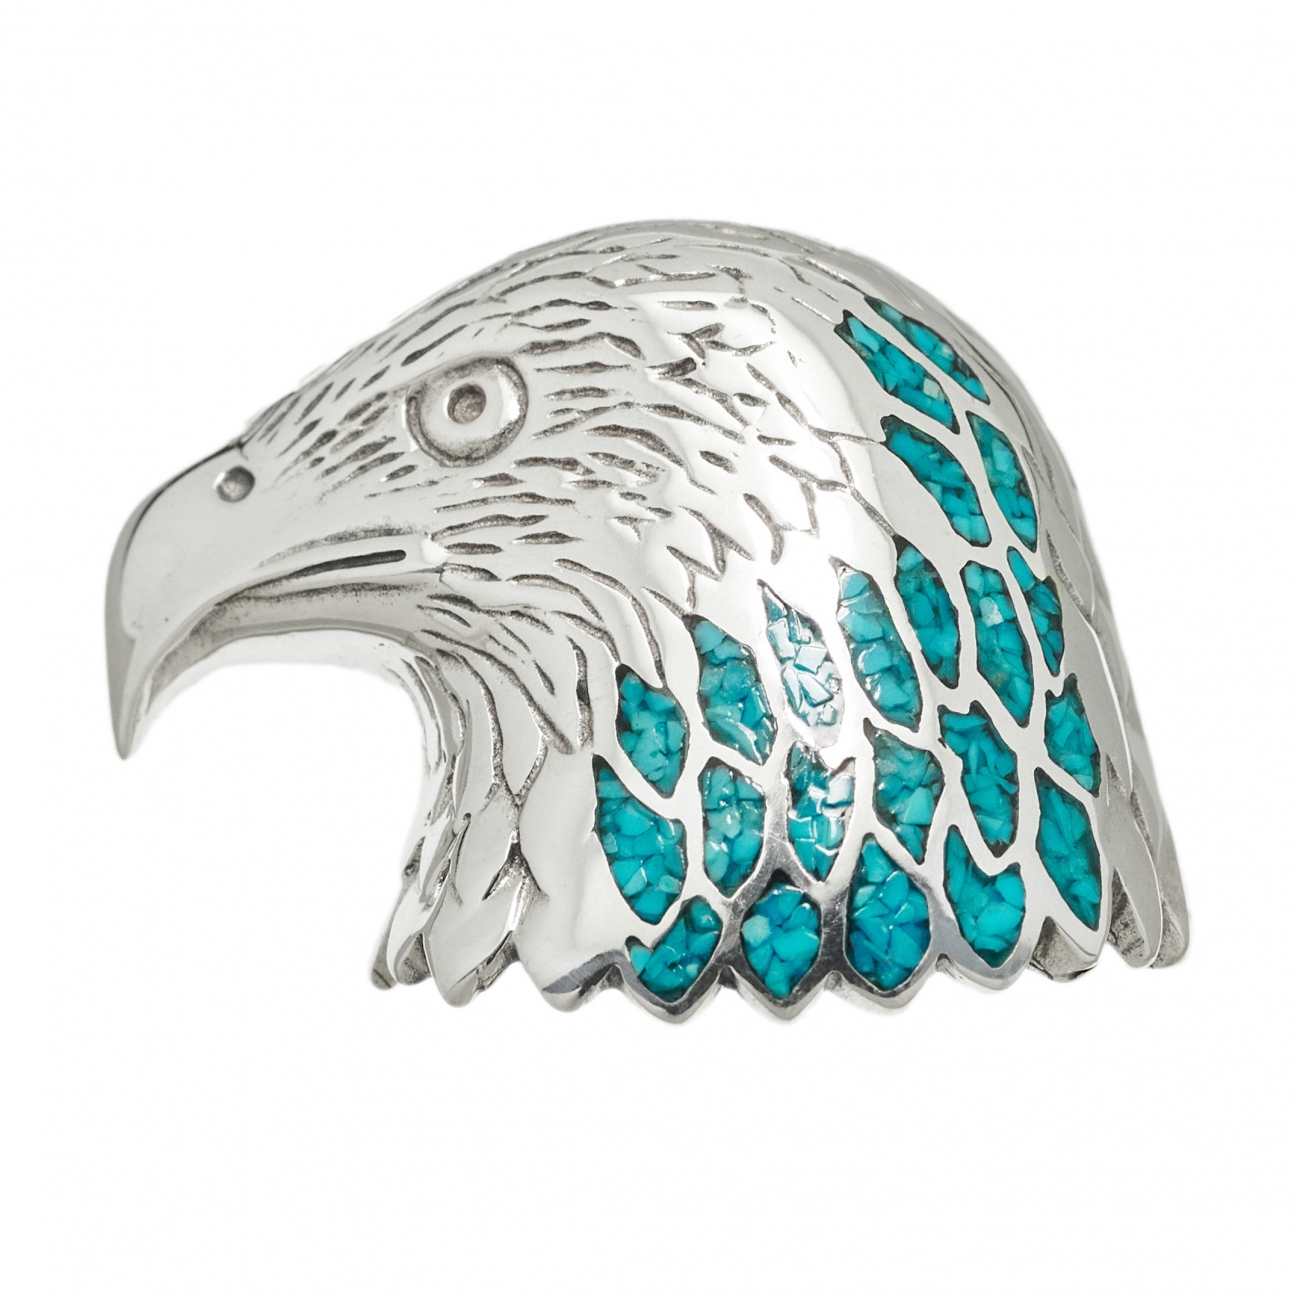 Harpo Paris pendant P150 eagle in chip inlay in silver